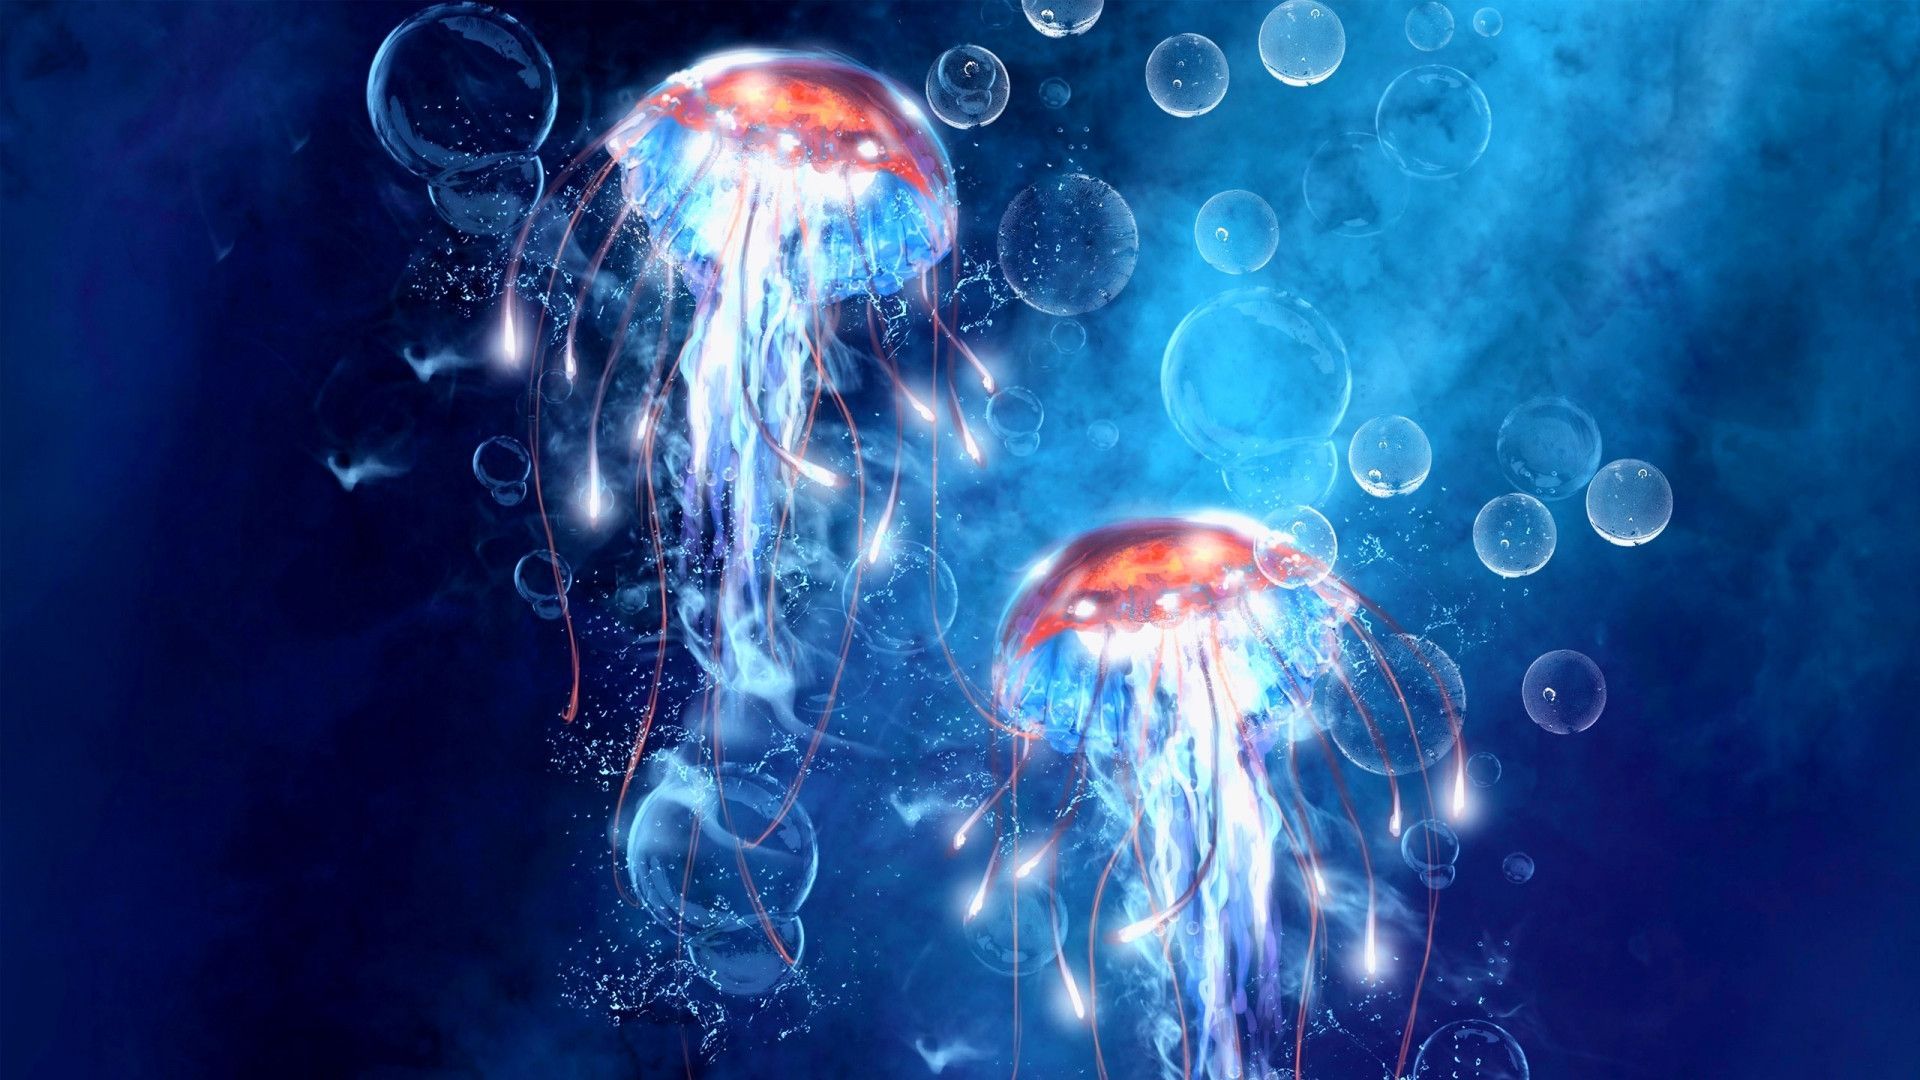 Wallpaper Beautiful jelly fish under water